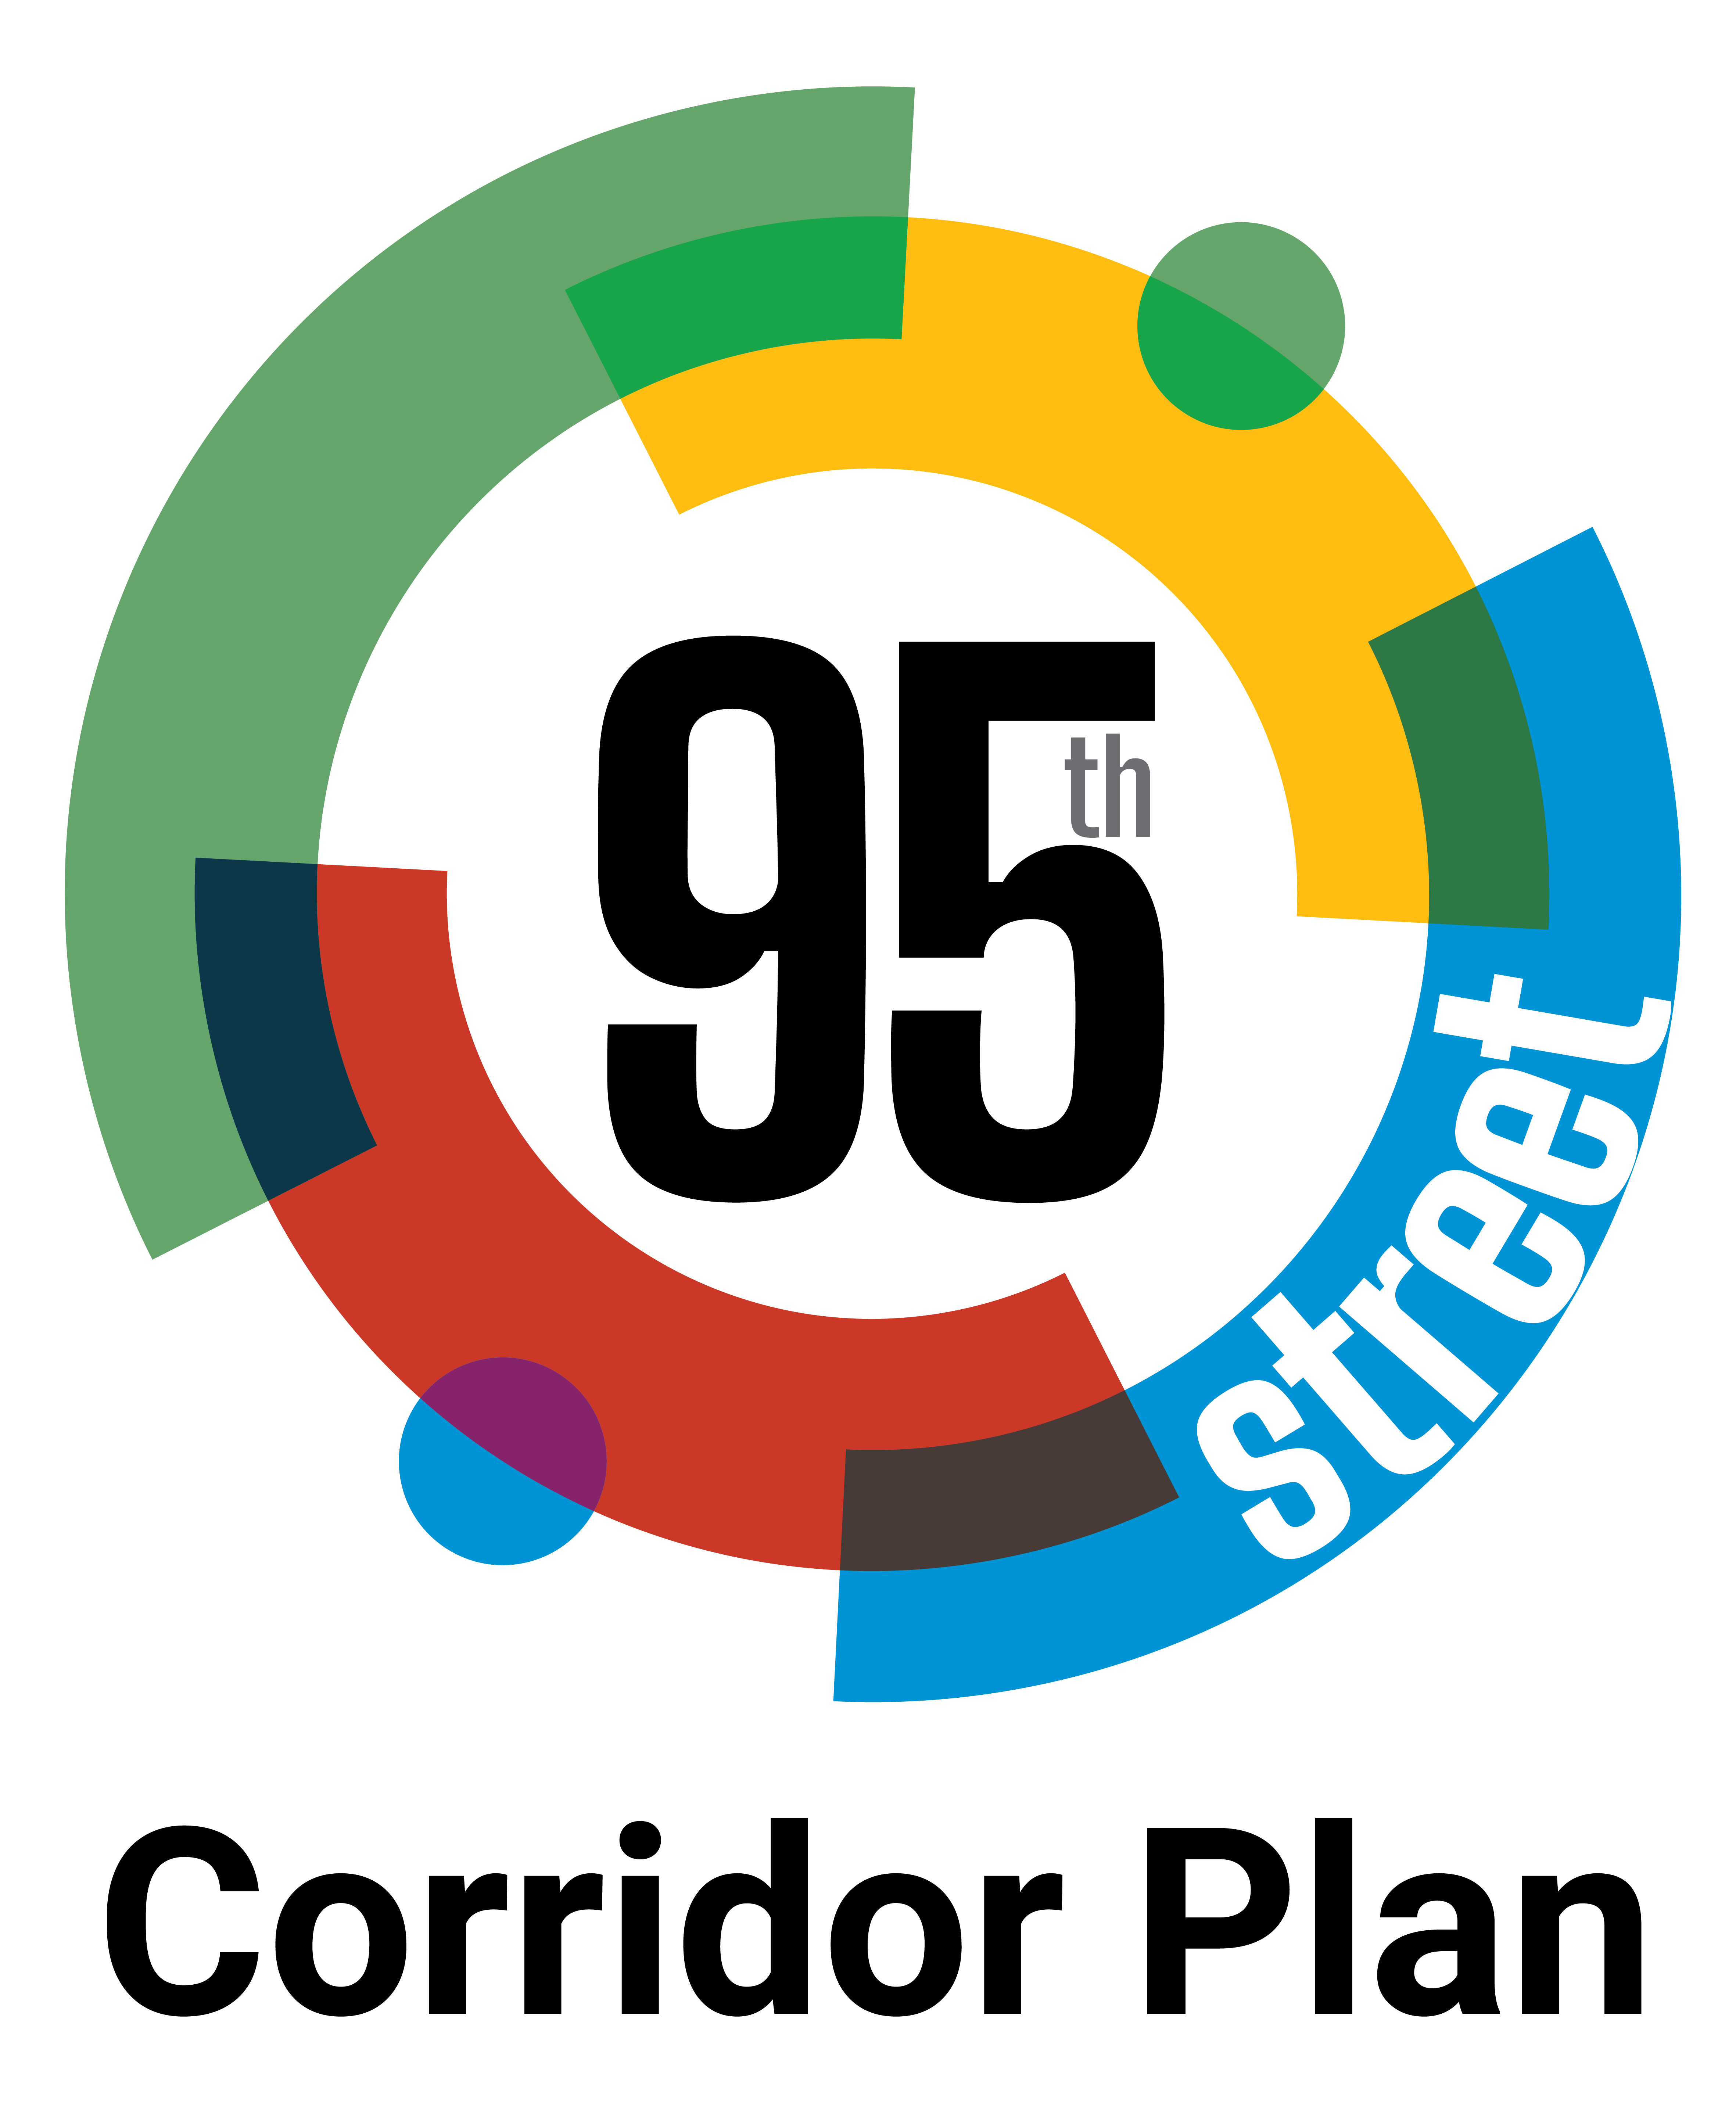 95th Street Corridor Plan logo